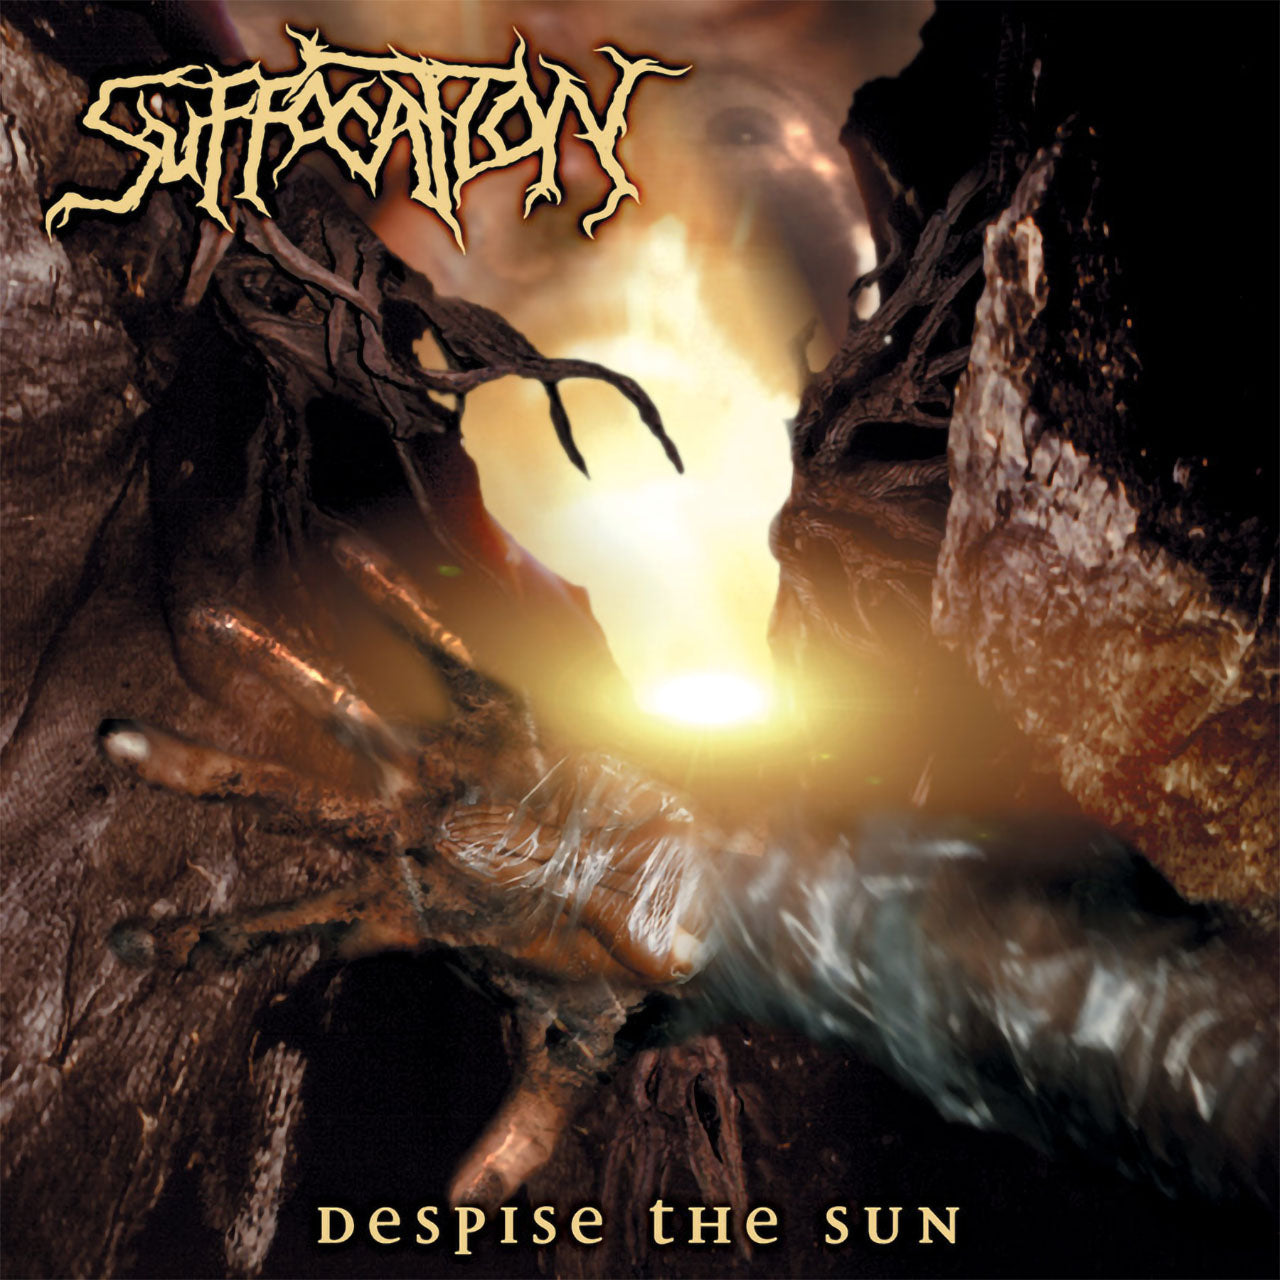 Suffocation - Despise the Sun (2002 Reissue) (CD)